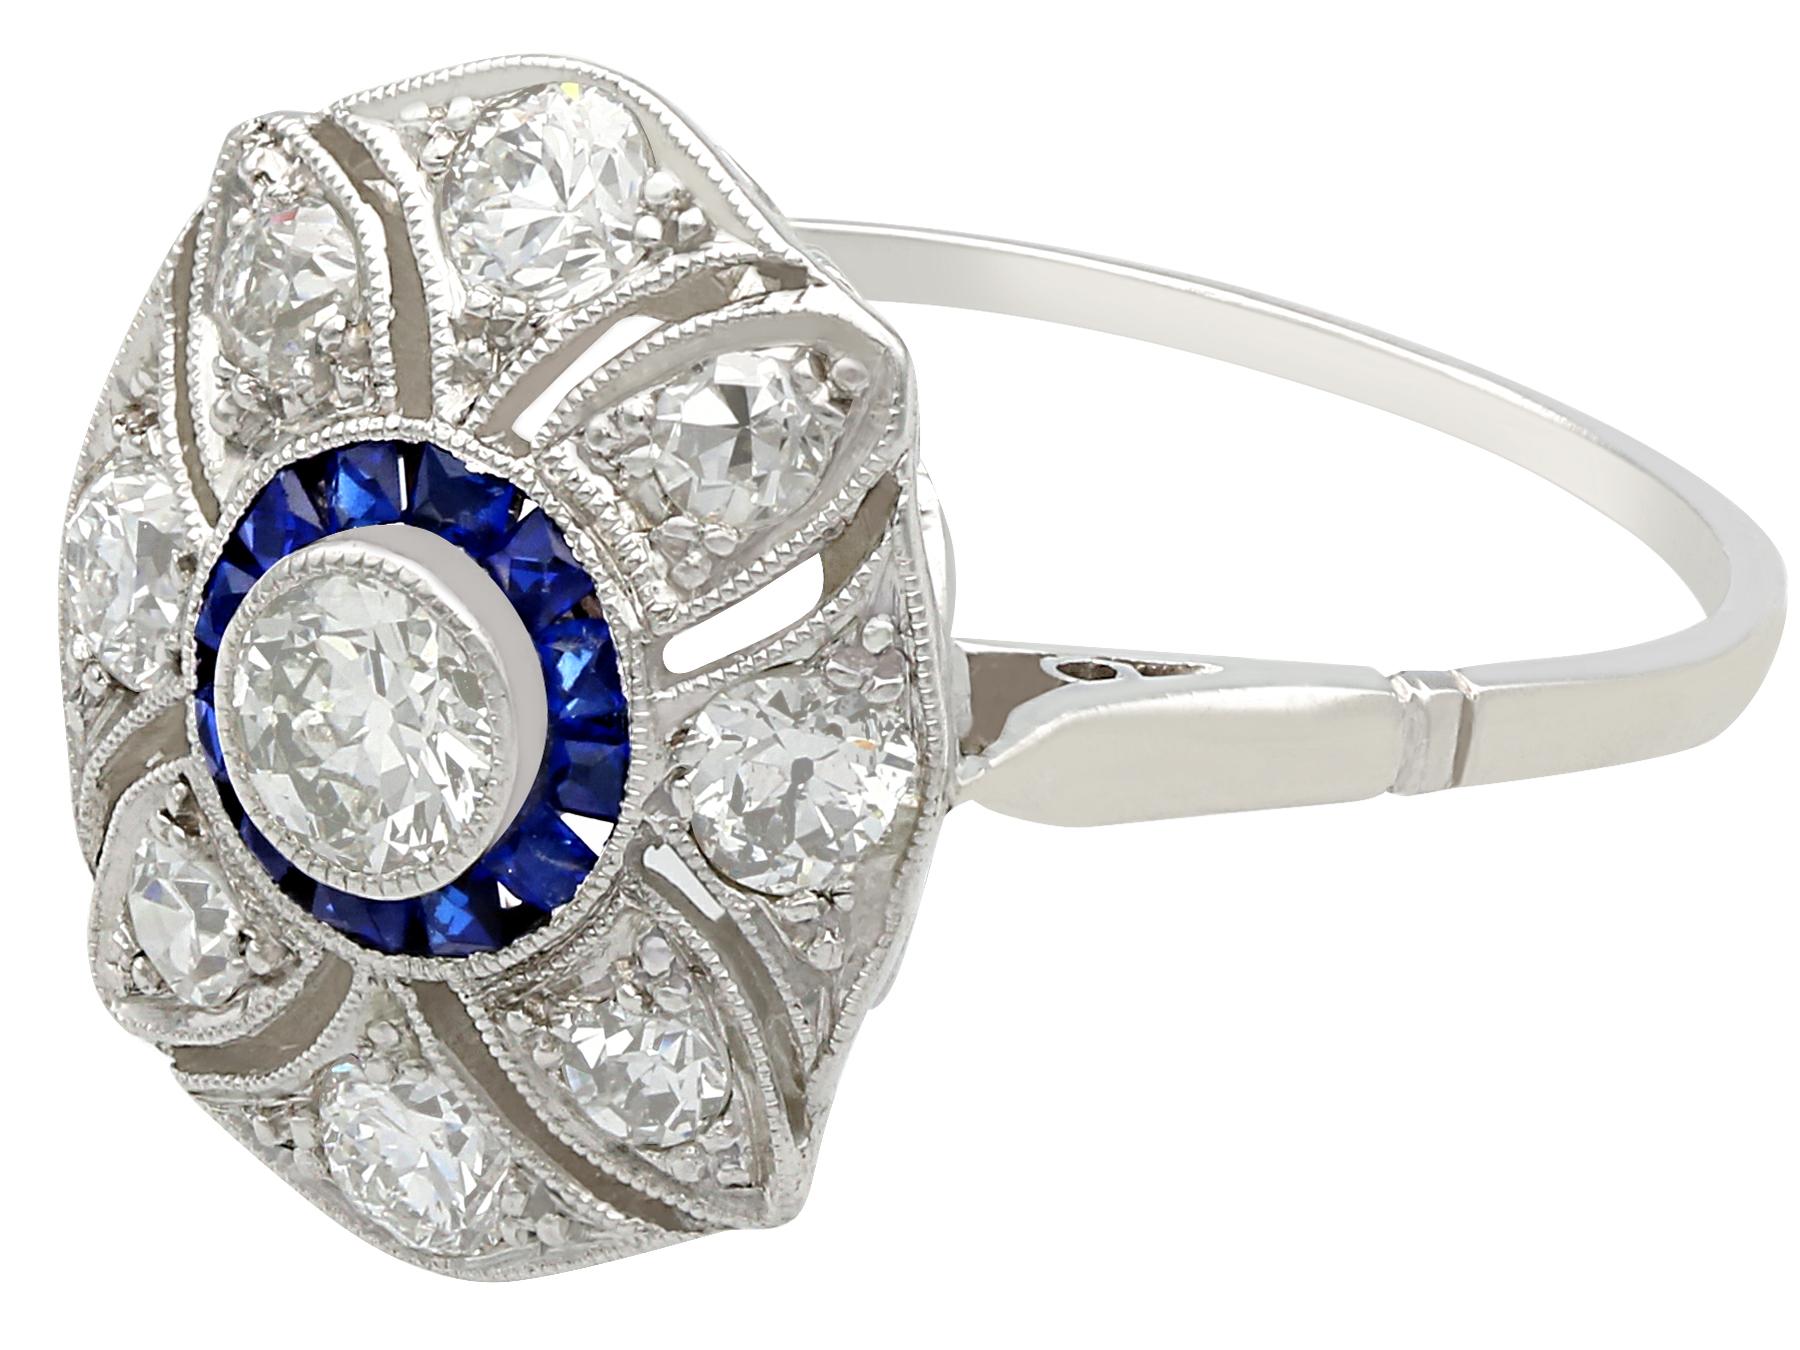 1940s sapphire and diamond ring